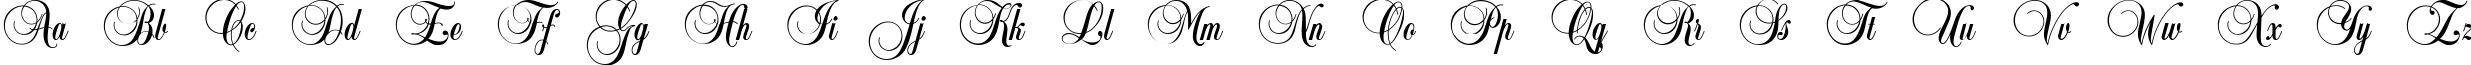 Пример написания английского алфавита шрифтом Copyist Thin